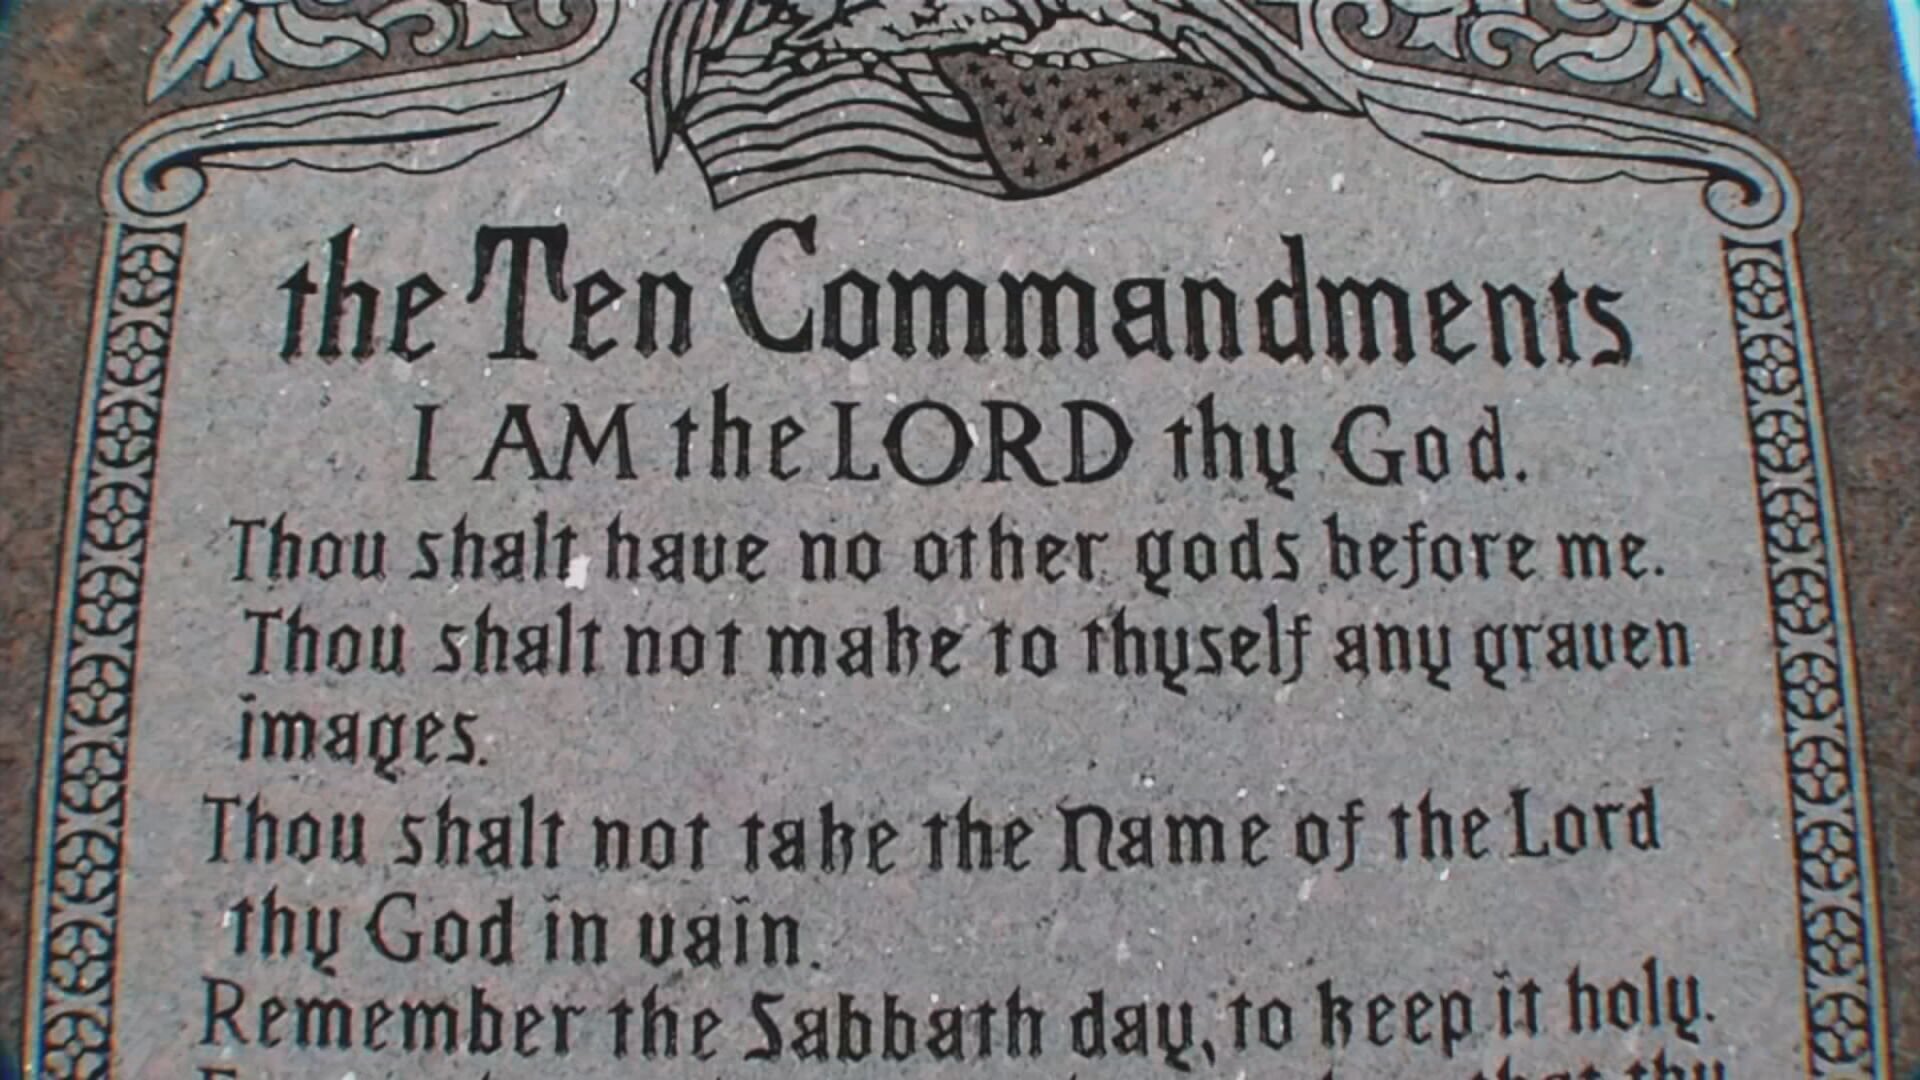 Oklahoma Bill Would Require Schools To Hang The Ten Commandments In Classrooms